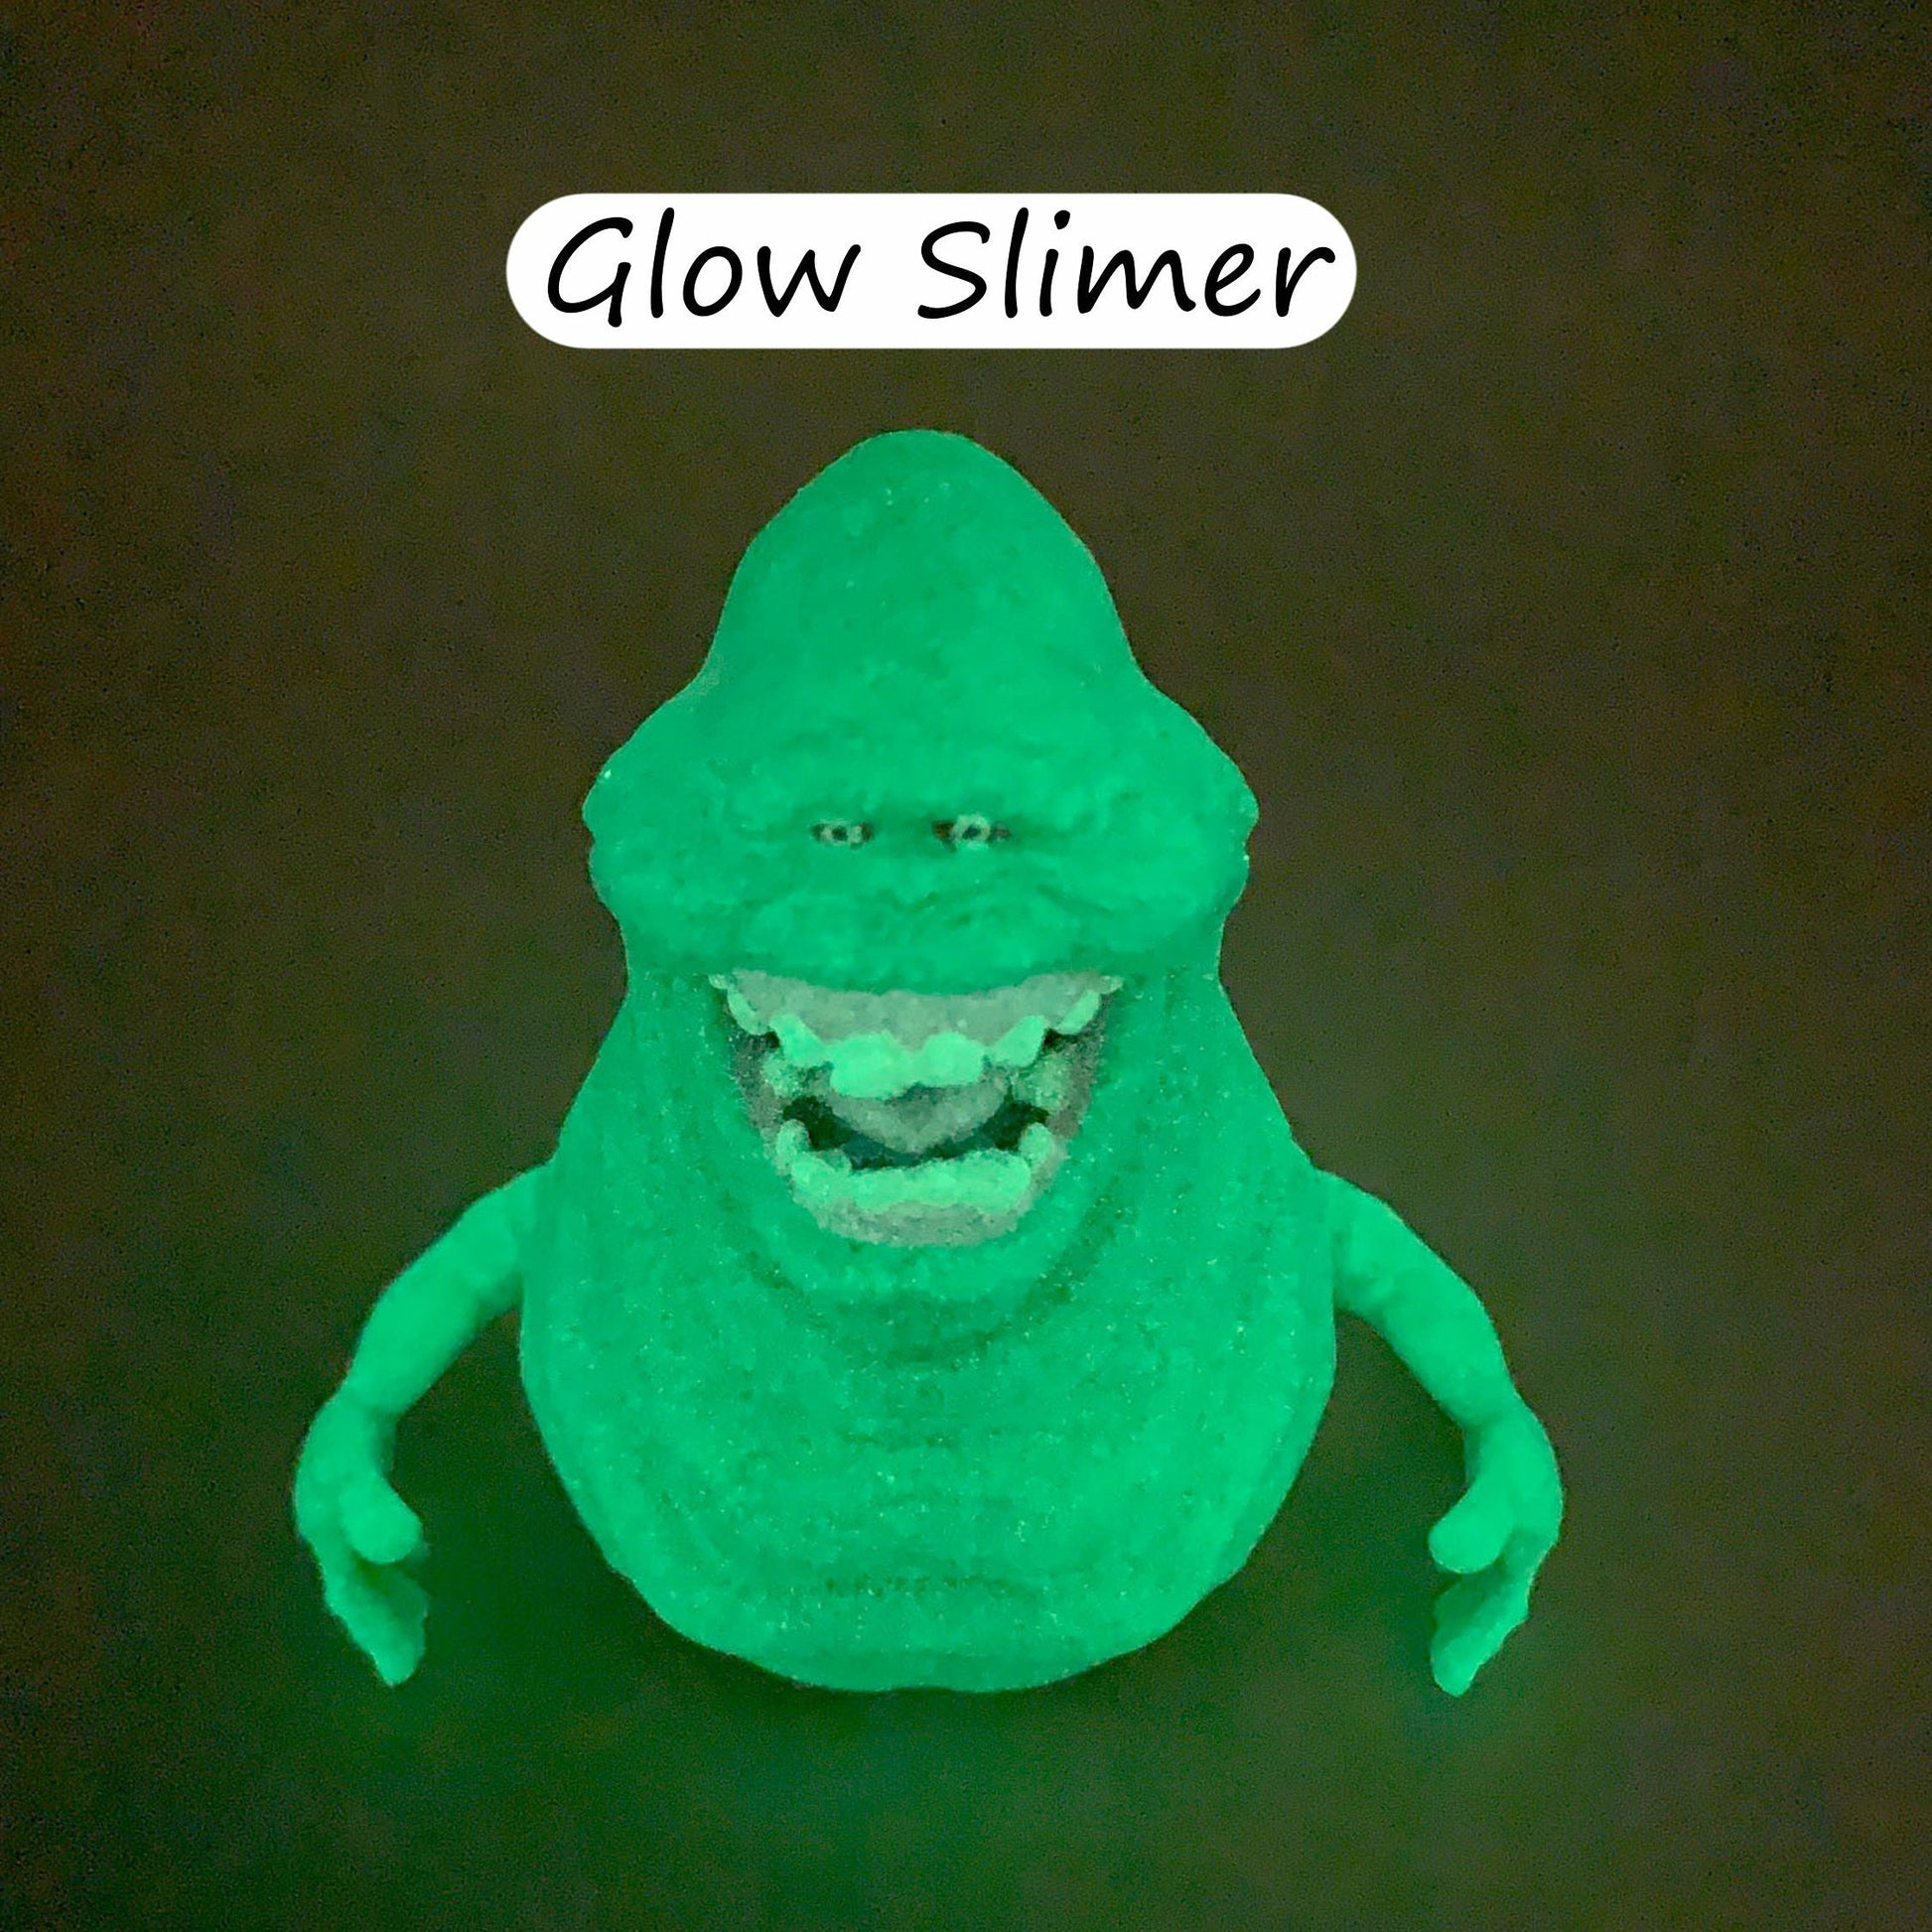 Ghostbusters Slimer Figure, Glow in the Dark Ghost Figure, Movie Memorabilia Props, Ghostbusters Fan Art, 3D Printed Resin Figure